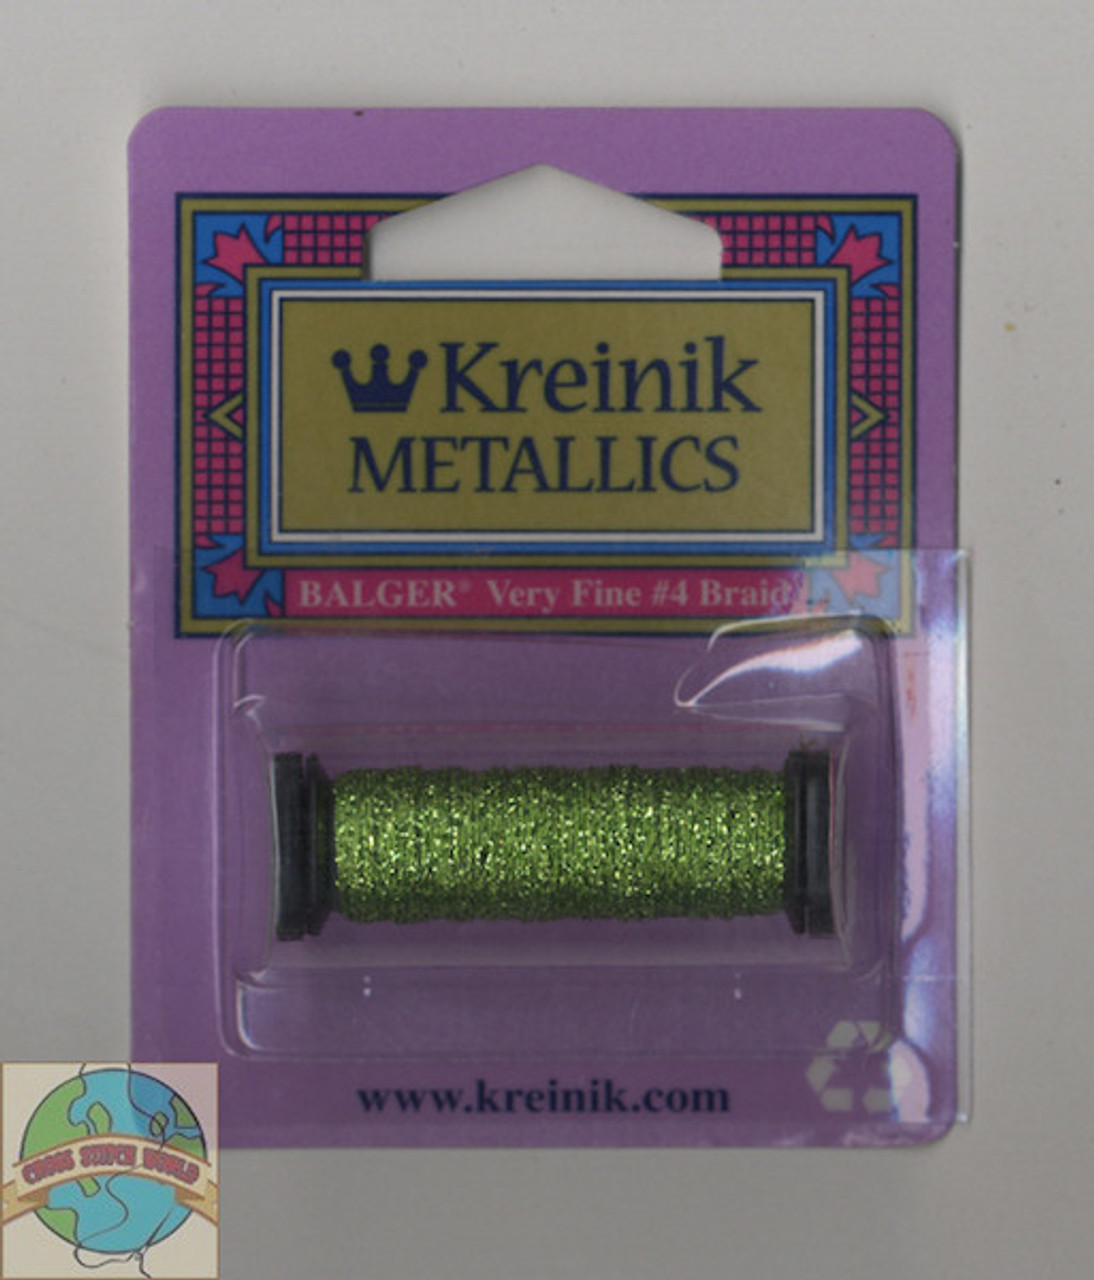 Kreinik Metallics - Very Fine #4 Chartreuse #015